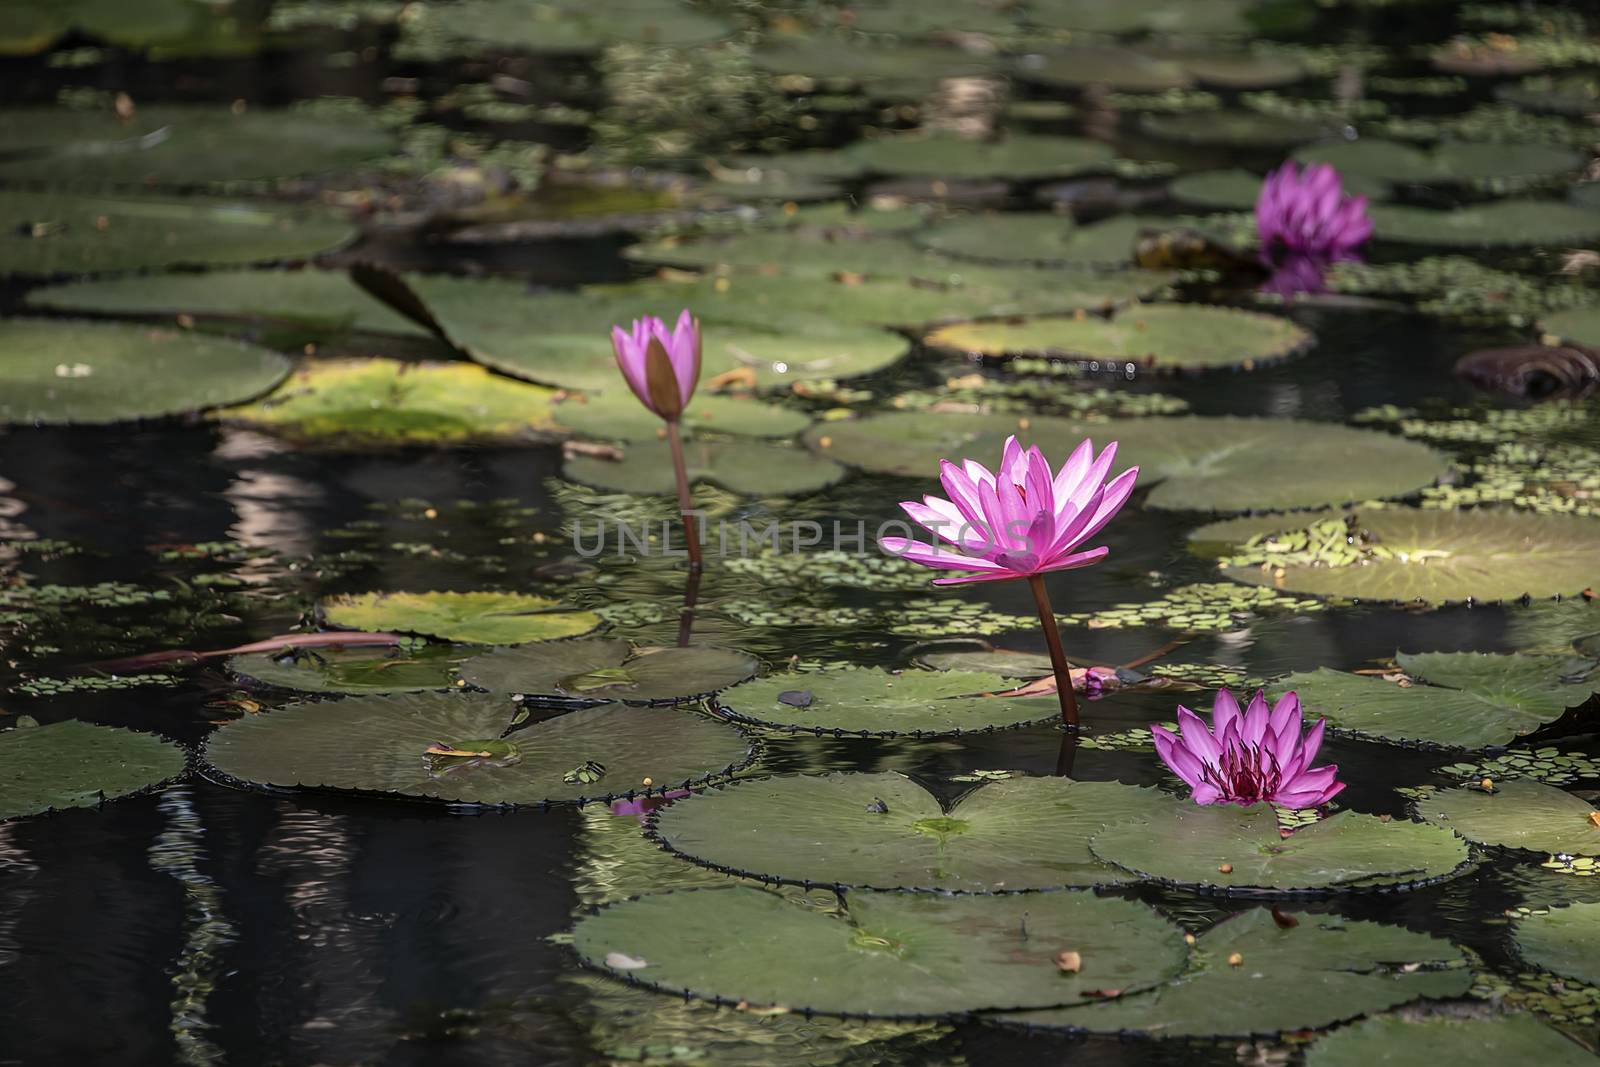 Sir Lanka, Sigyriya: Lotus flower blooming in a reflective pool